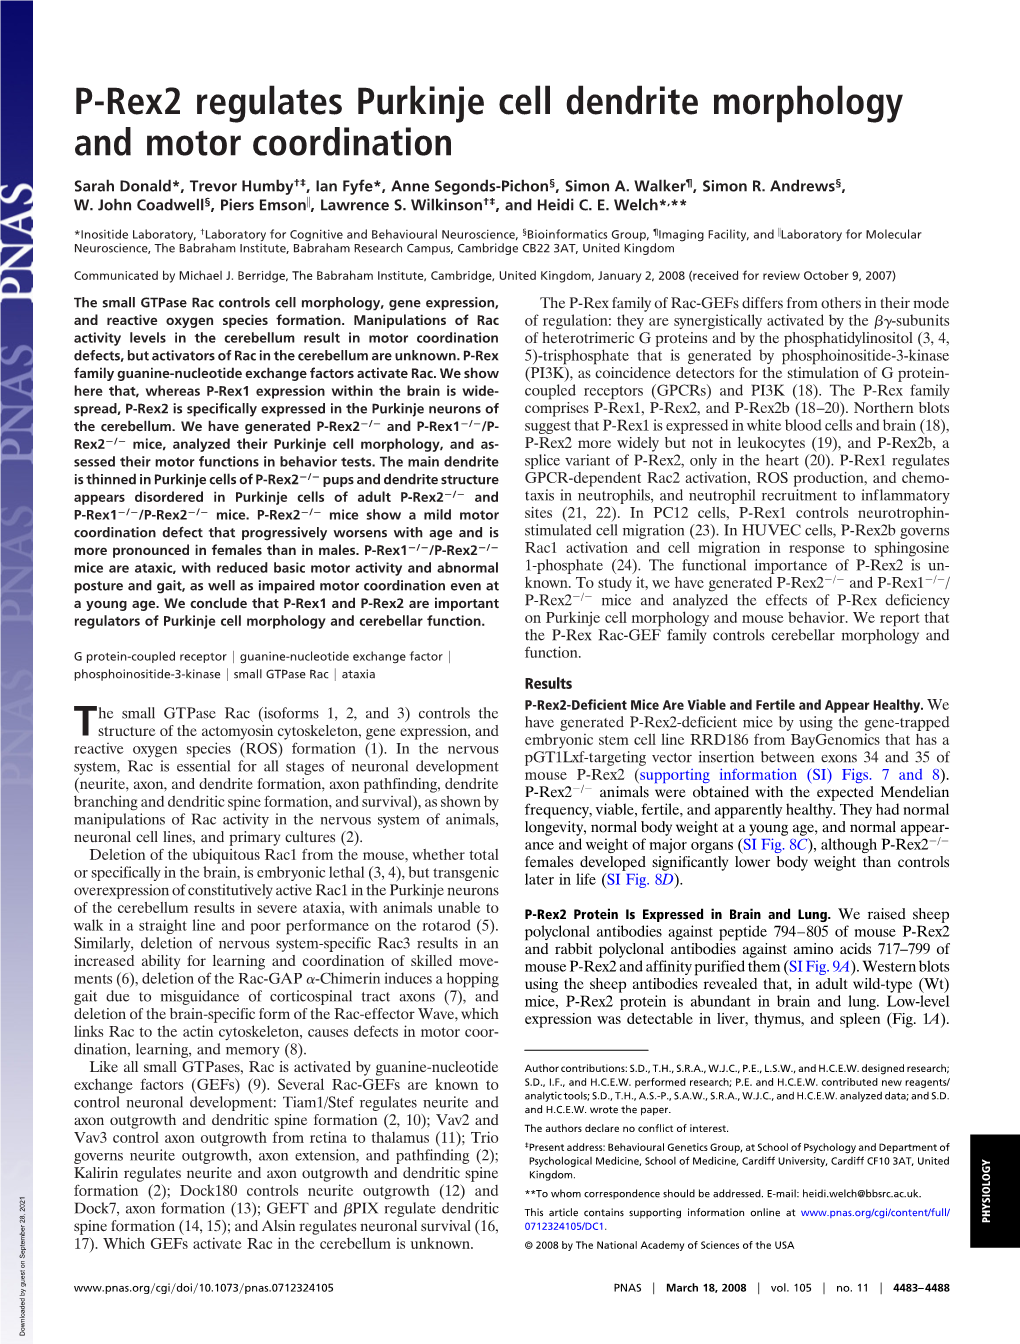 P-Rex2 Regulates Purkinje Cell Dendrite Morphology and Motor Coordination